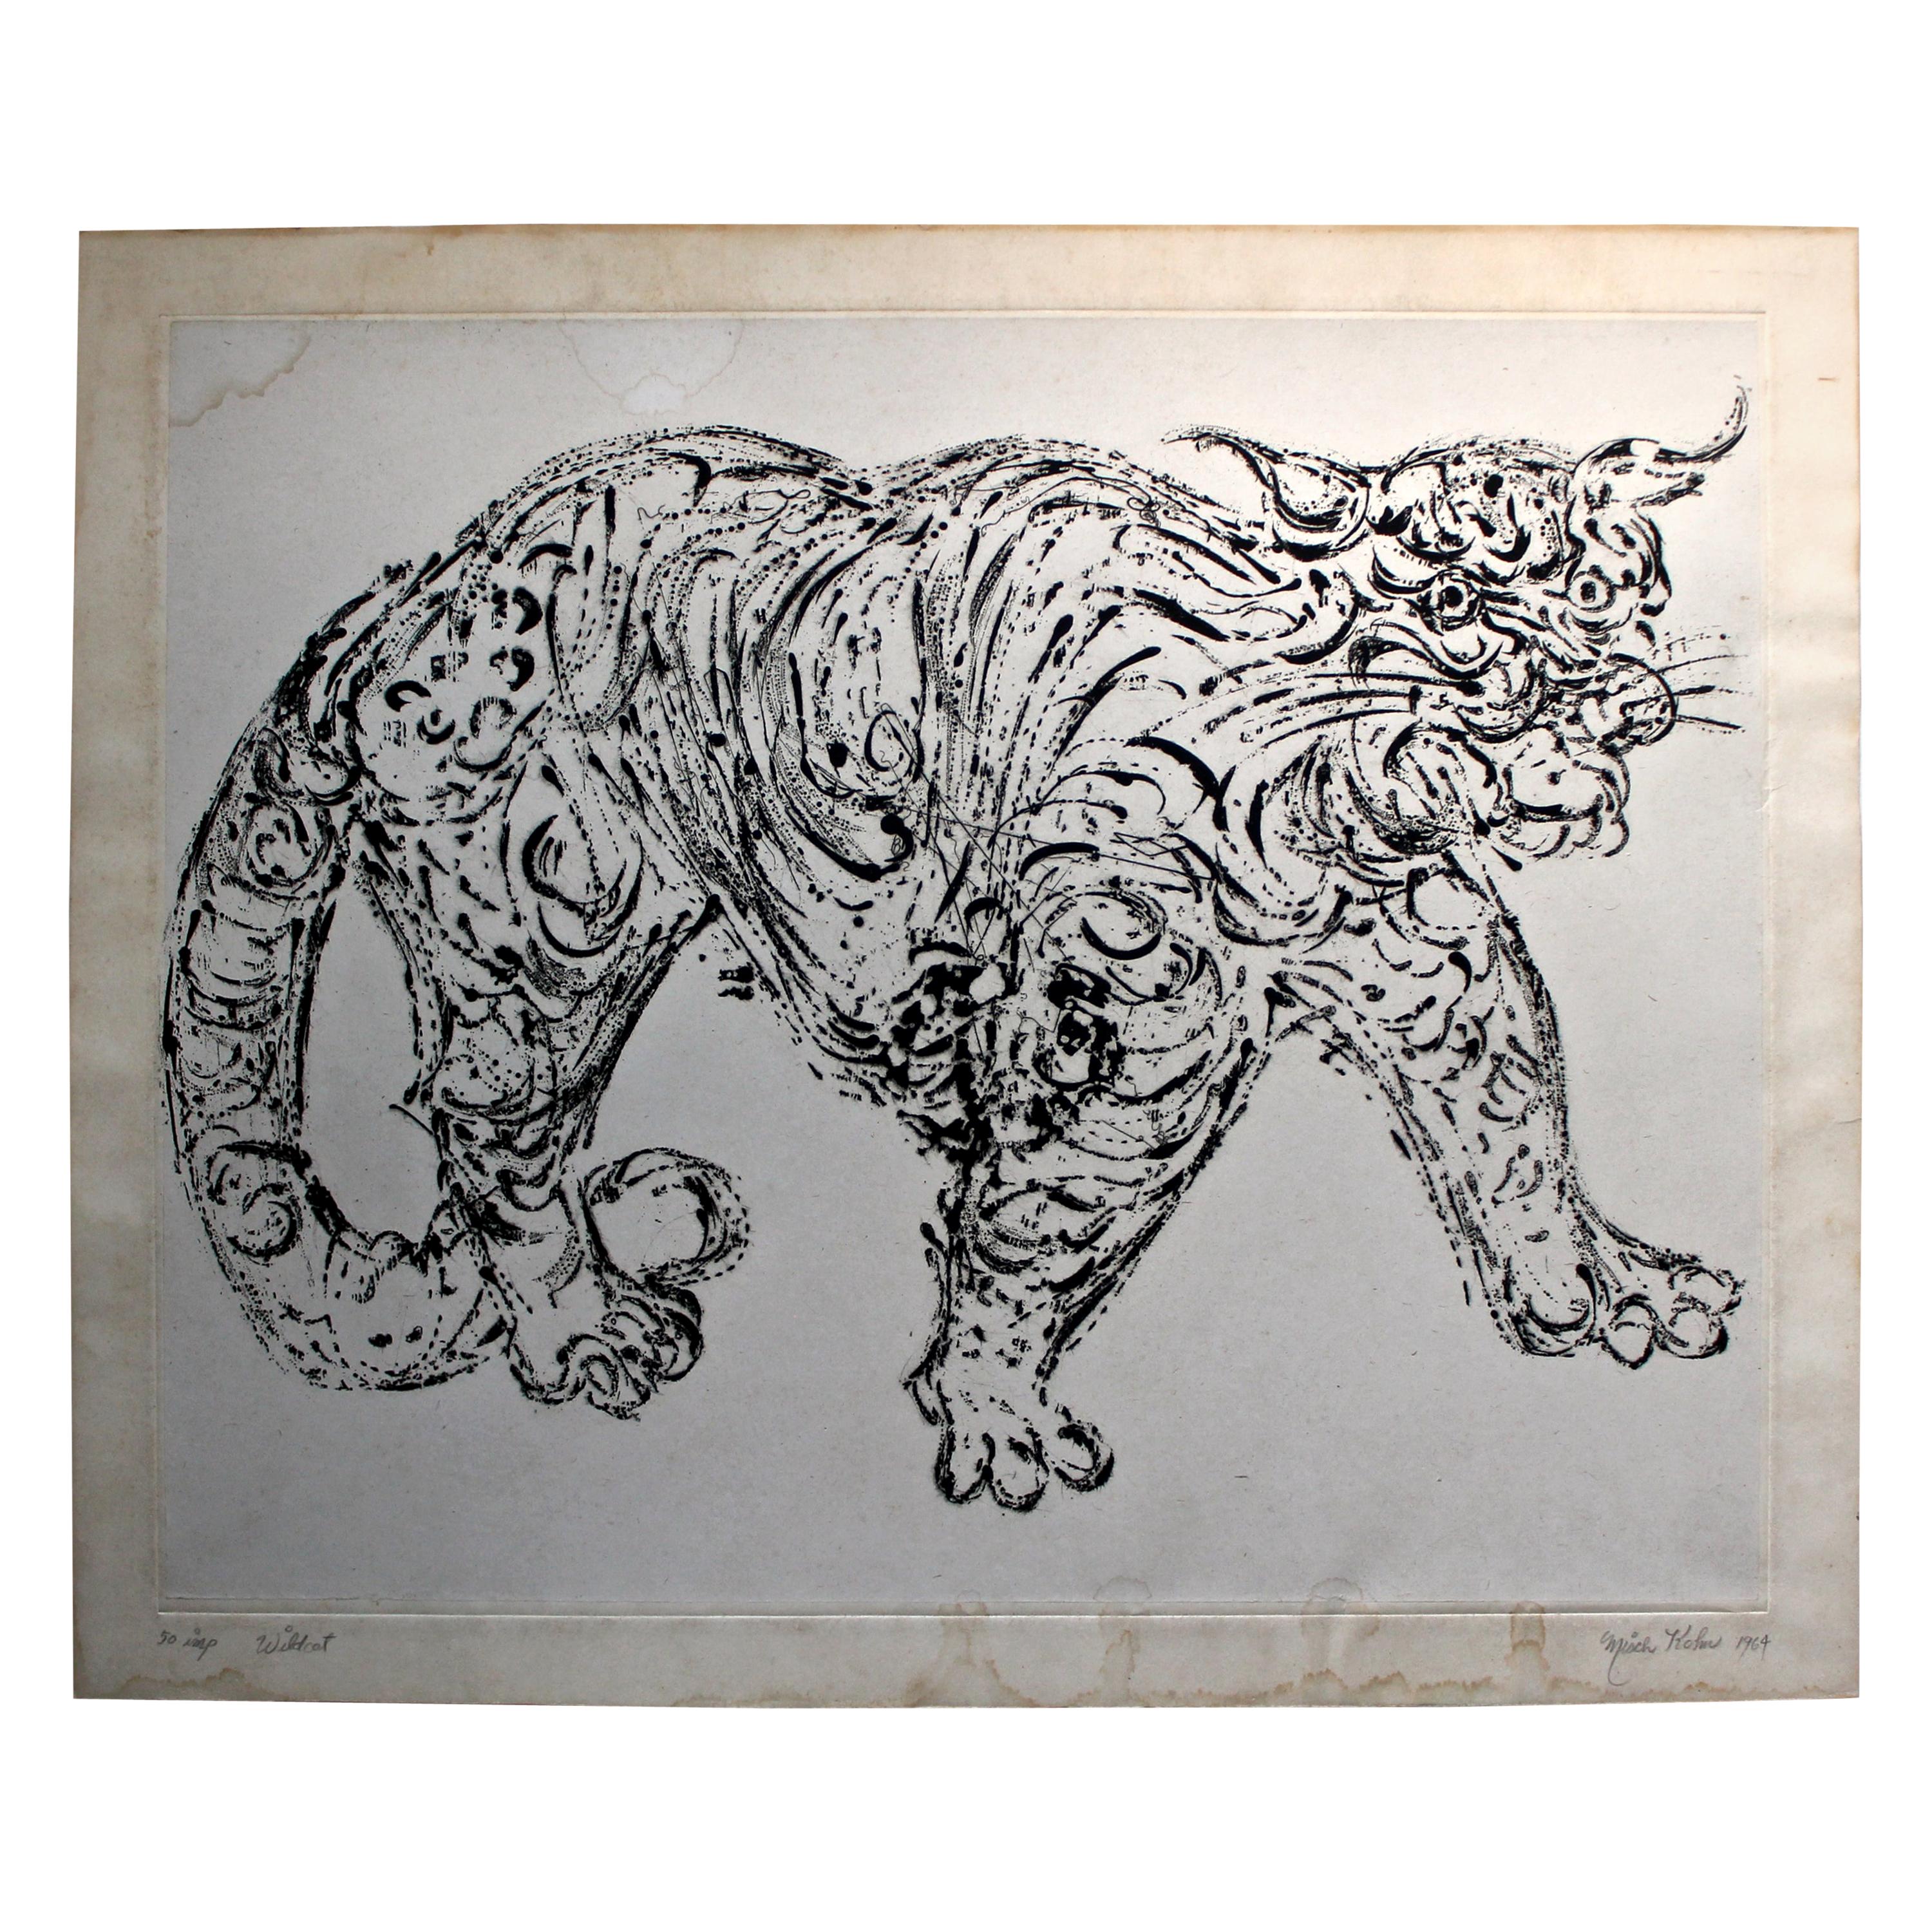 Misch Kohn 1964 Etching "Wildcat"